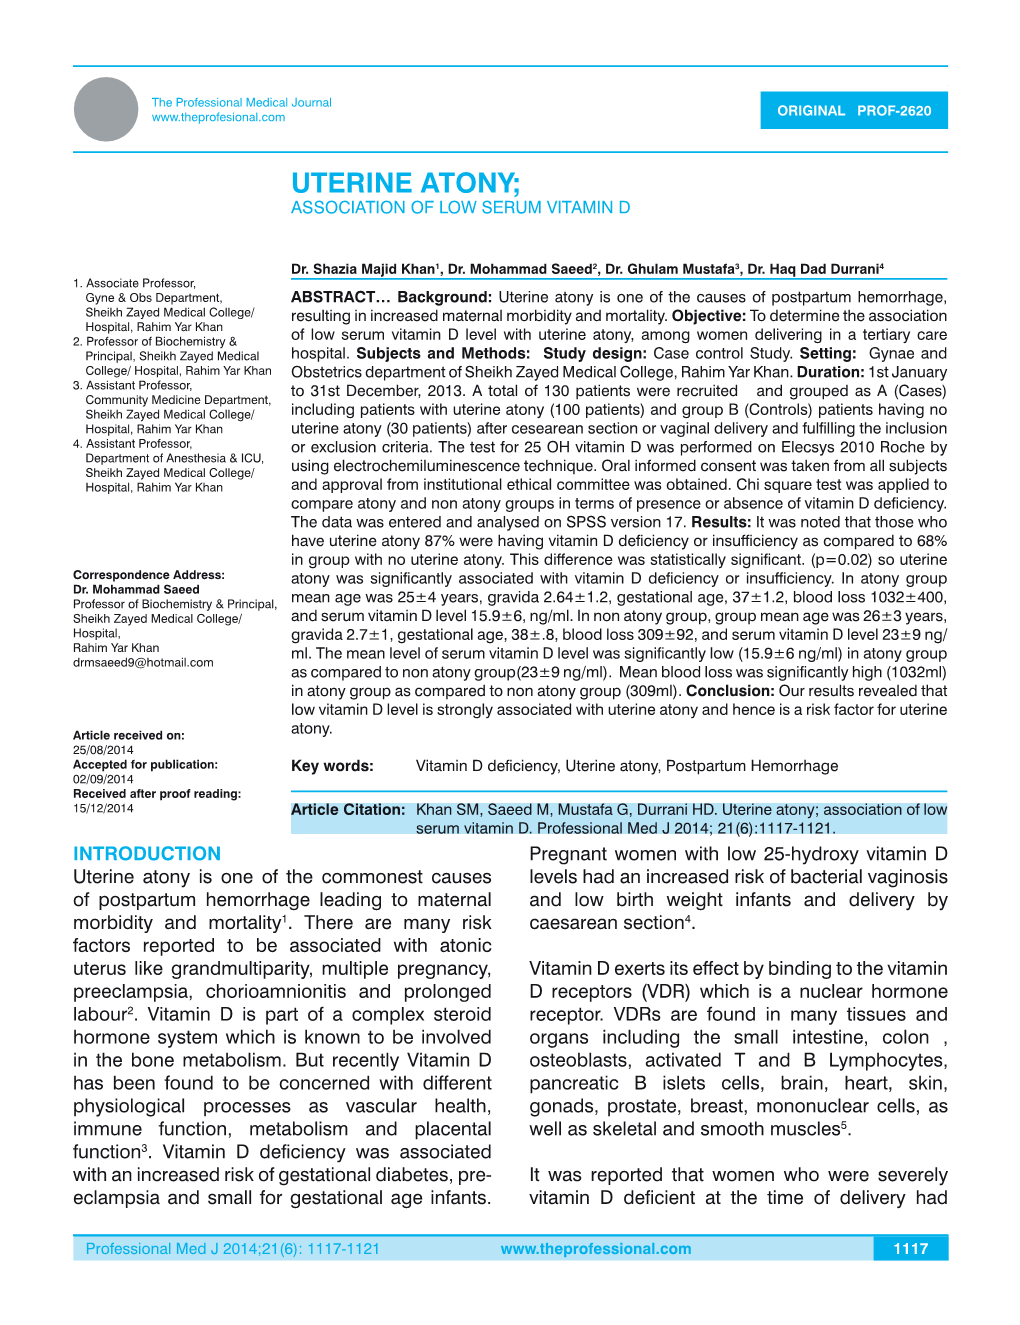 Uterine Atony; Association of Low Serum Vitamin D